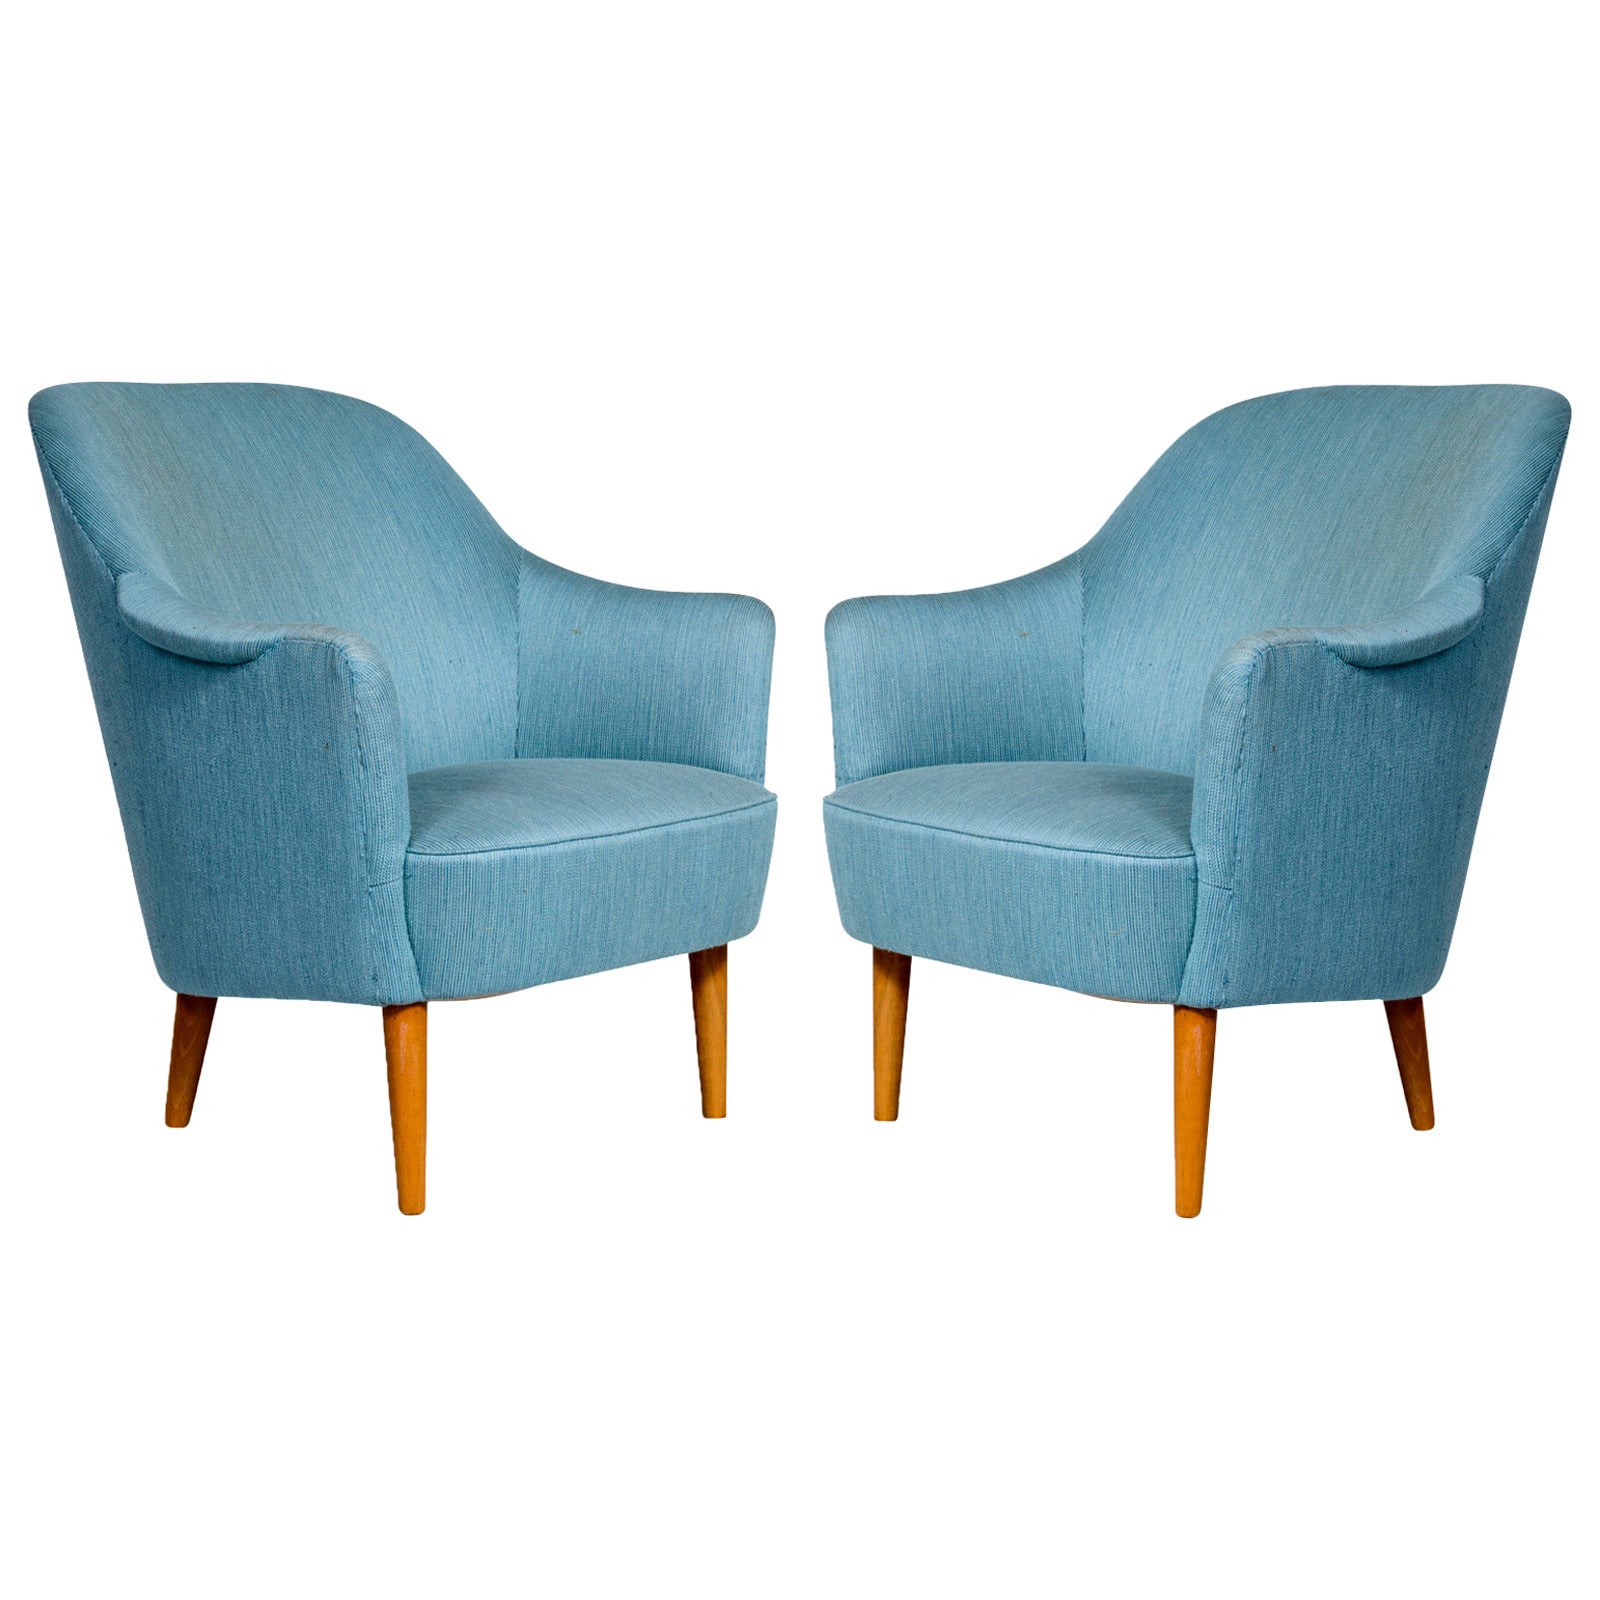 Pair of Carl Malmsten "Samspel" Lounge Chairs